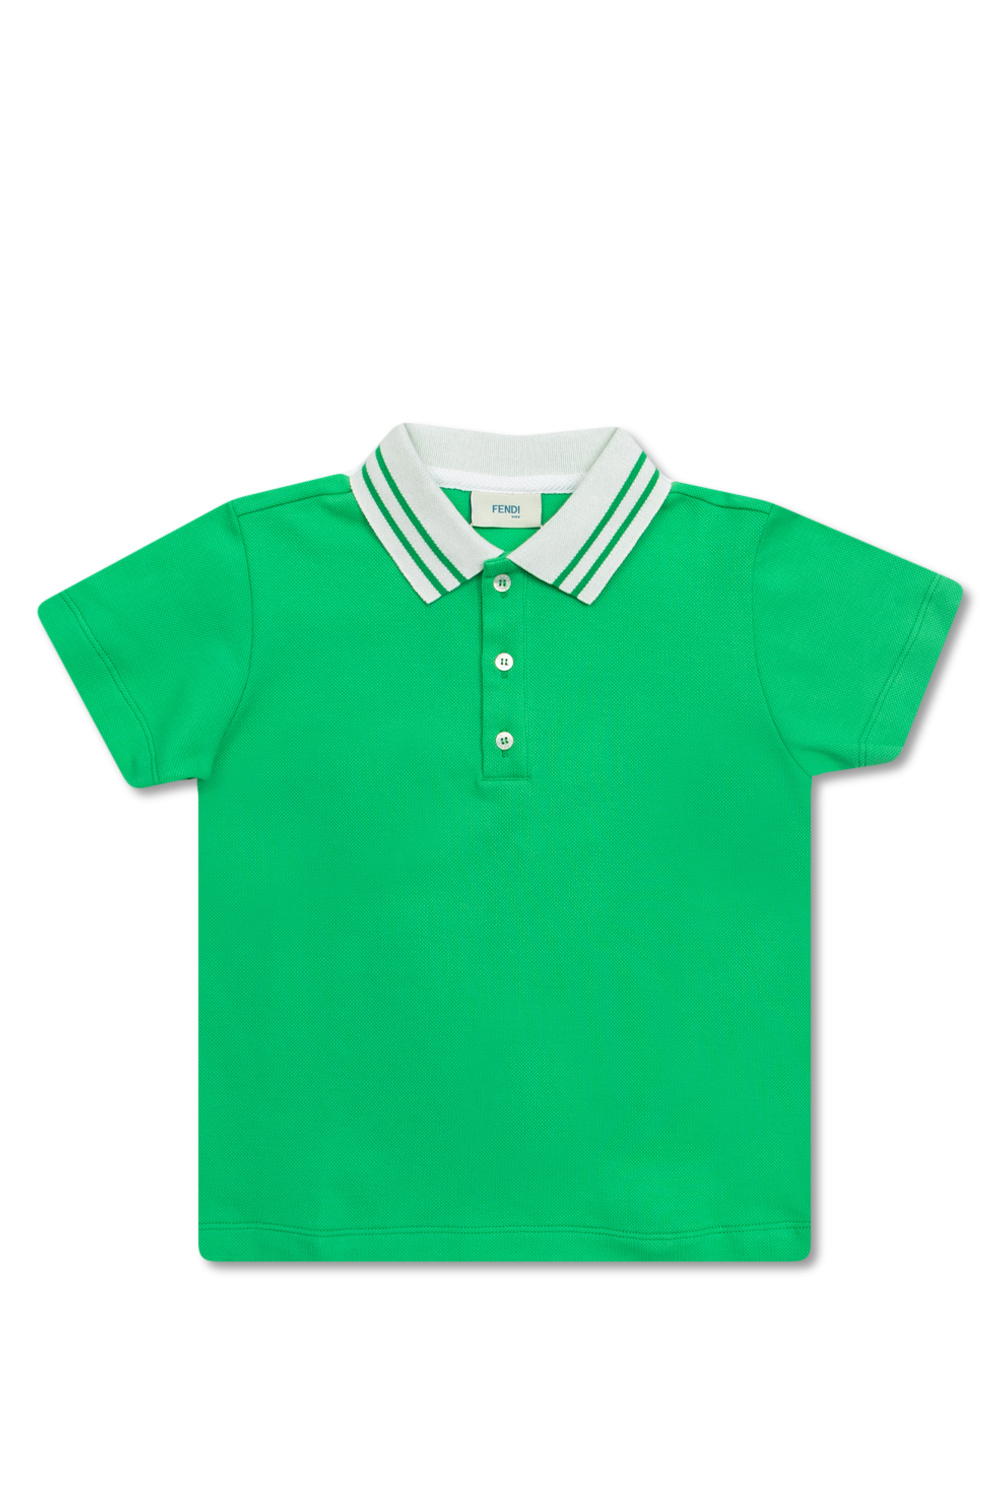 Fendi Kids cups wallets clothing polo-shirts key-chains Kids